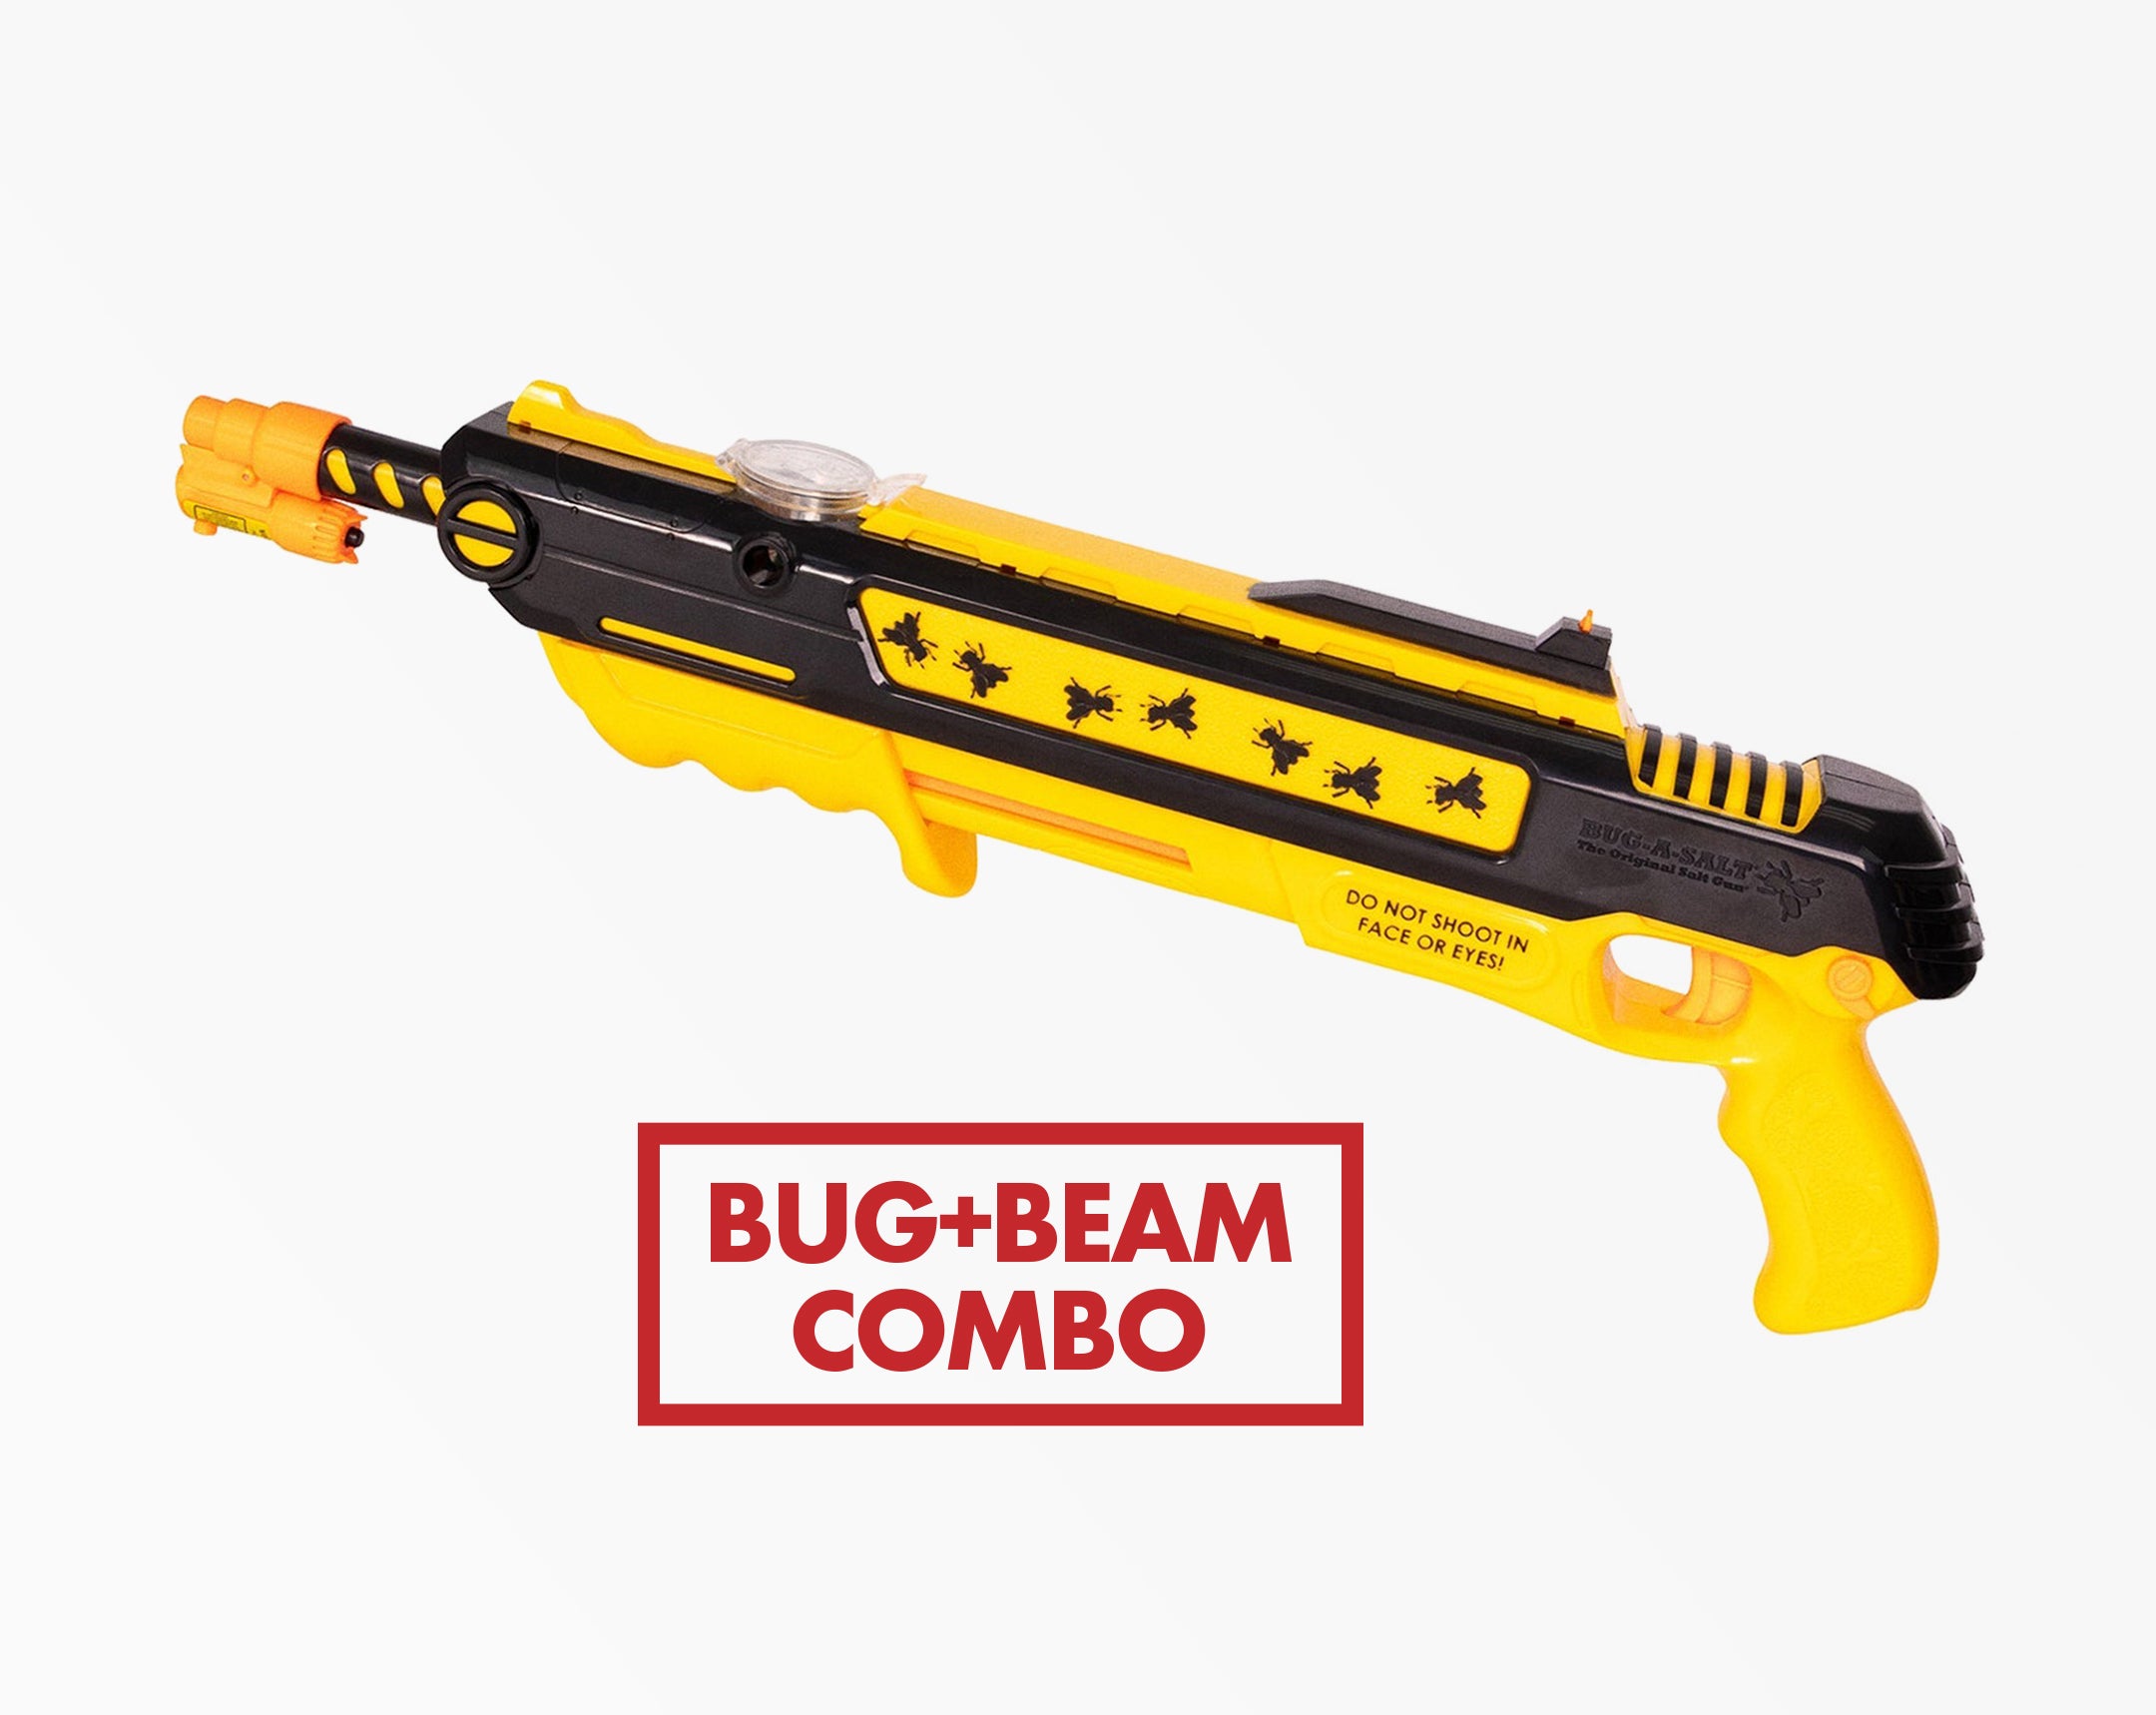 Bug-Beam & Reverse Yellow Bug-A-Salt 2.5